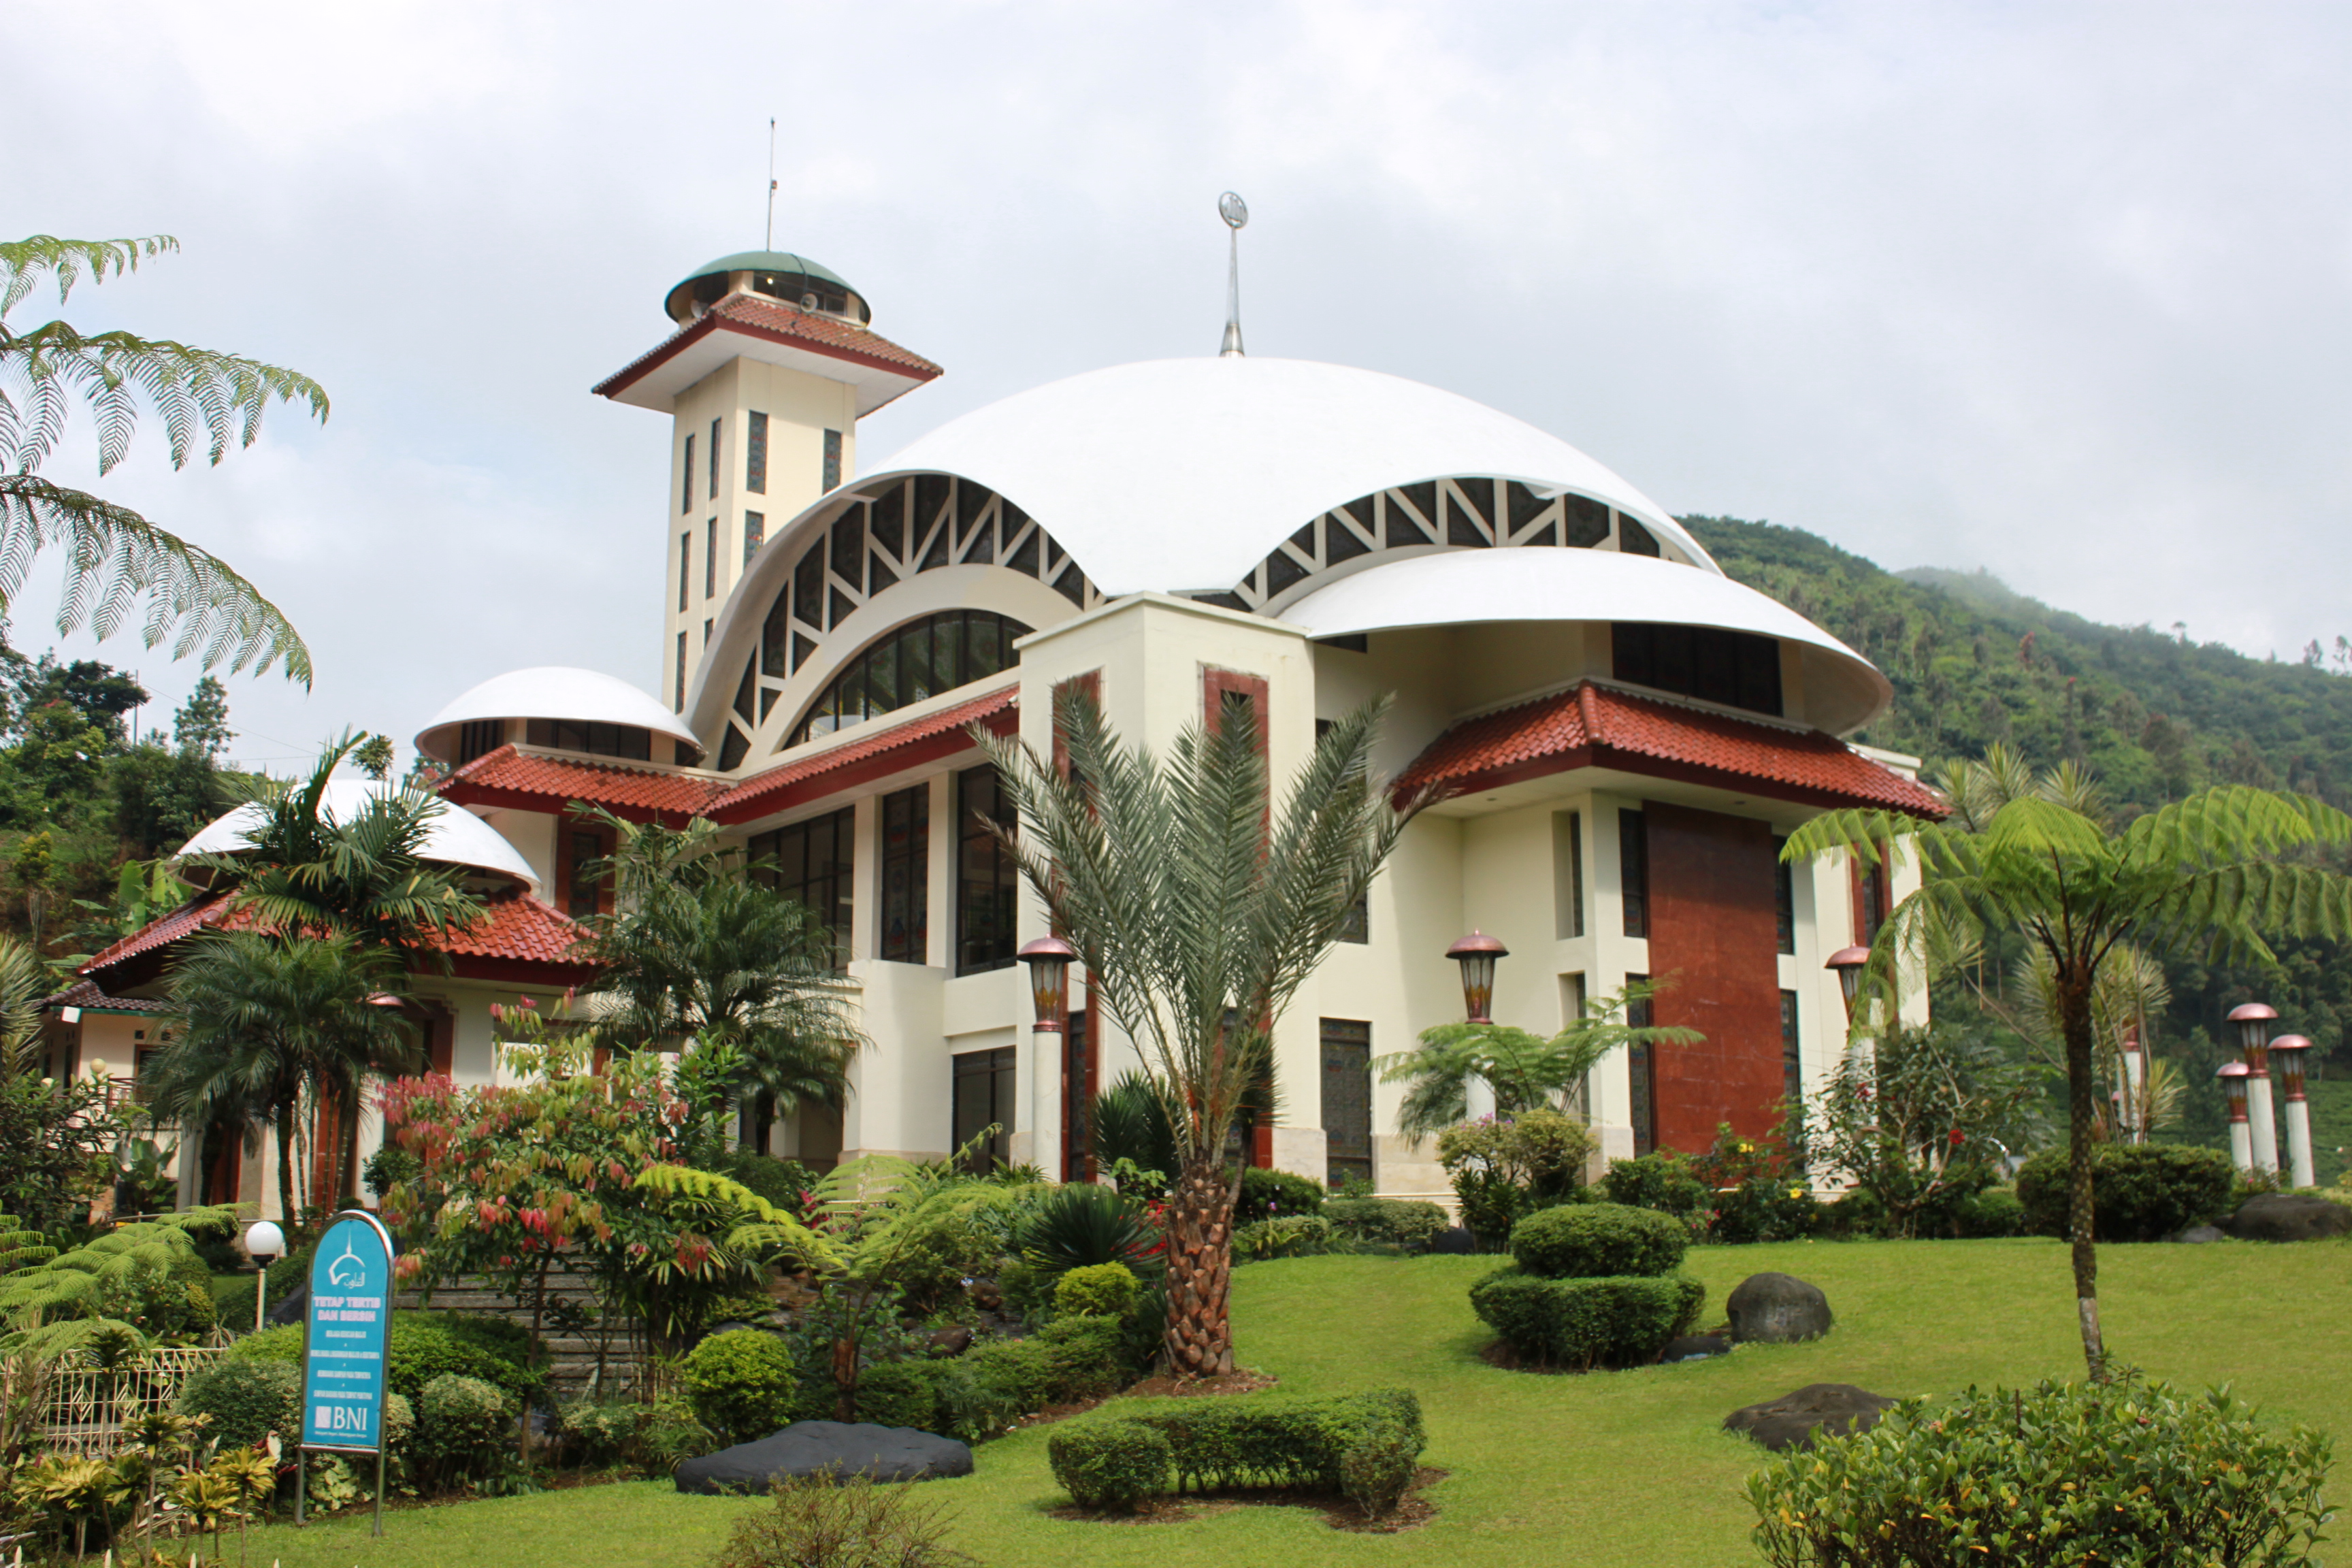 Masjid AttaAwun